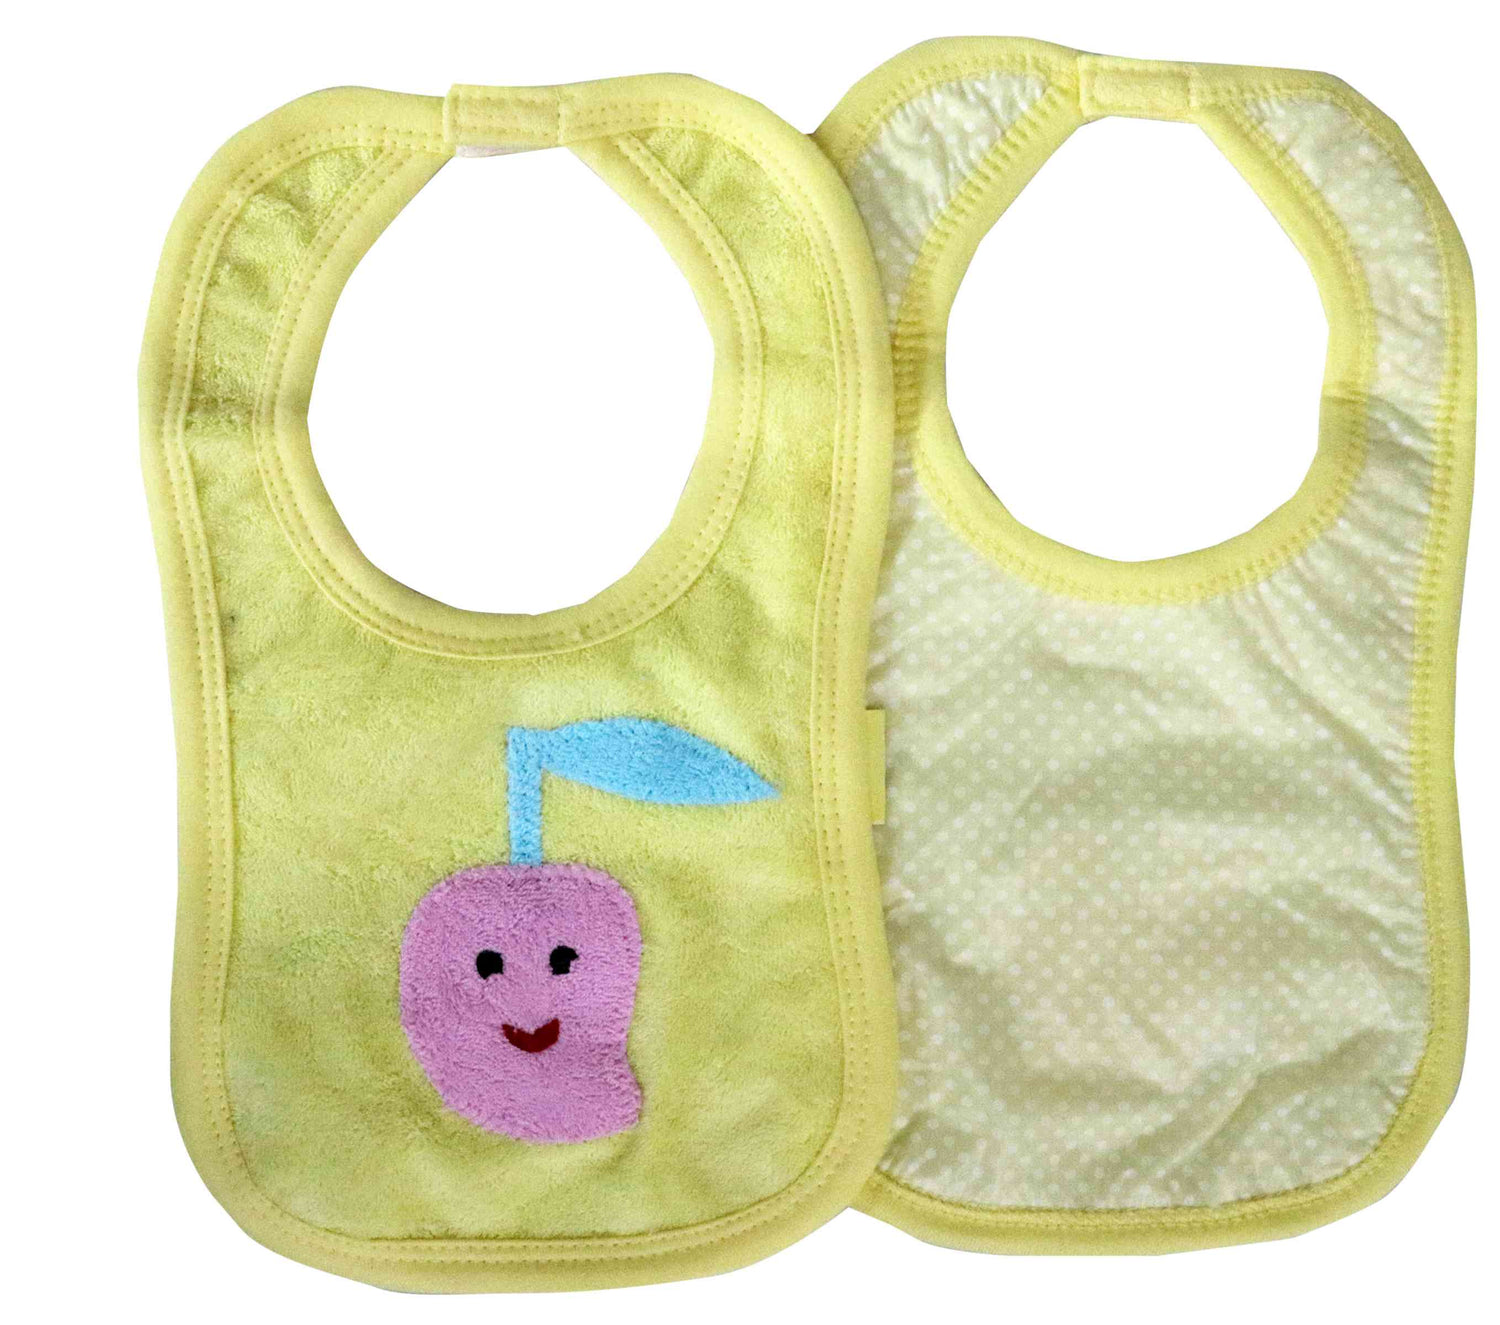 Newborn pure soft cotton bibs for 0-36 month babies pack of 6 pcs. - FAVISM